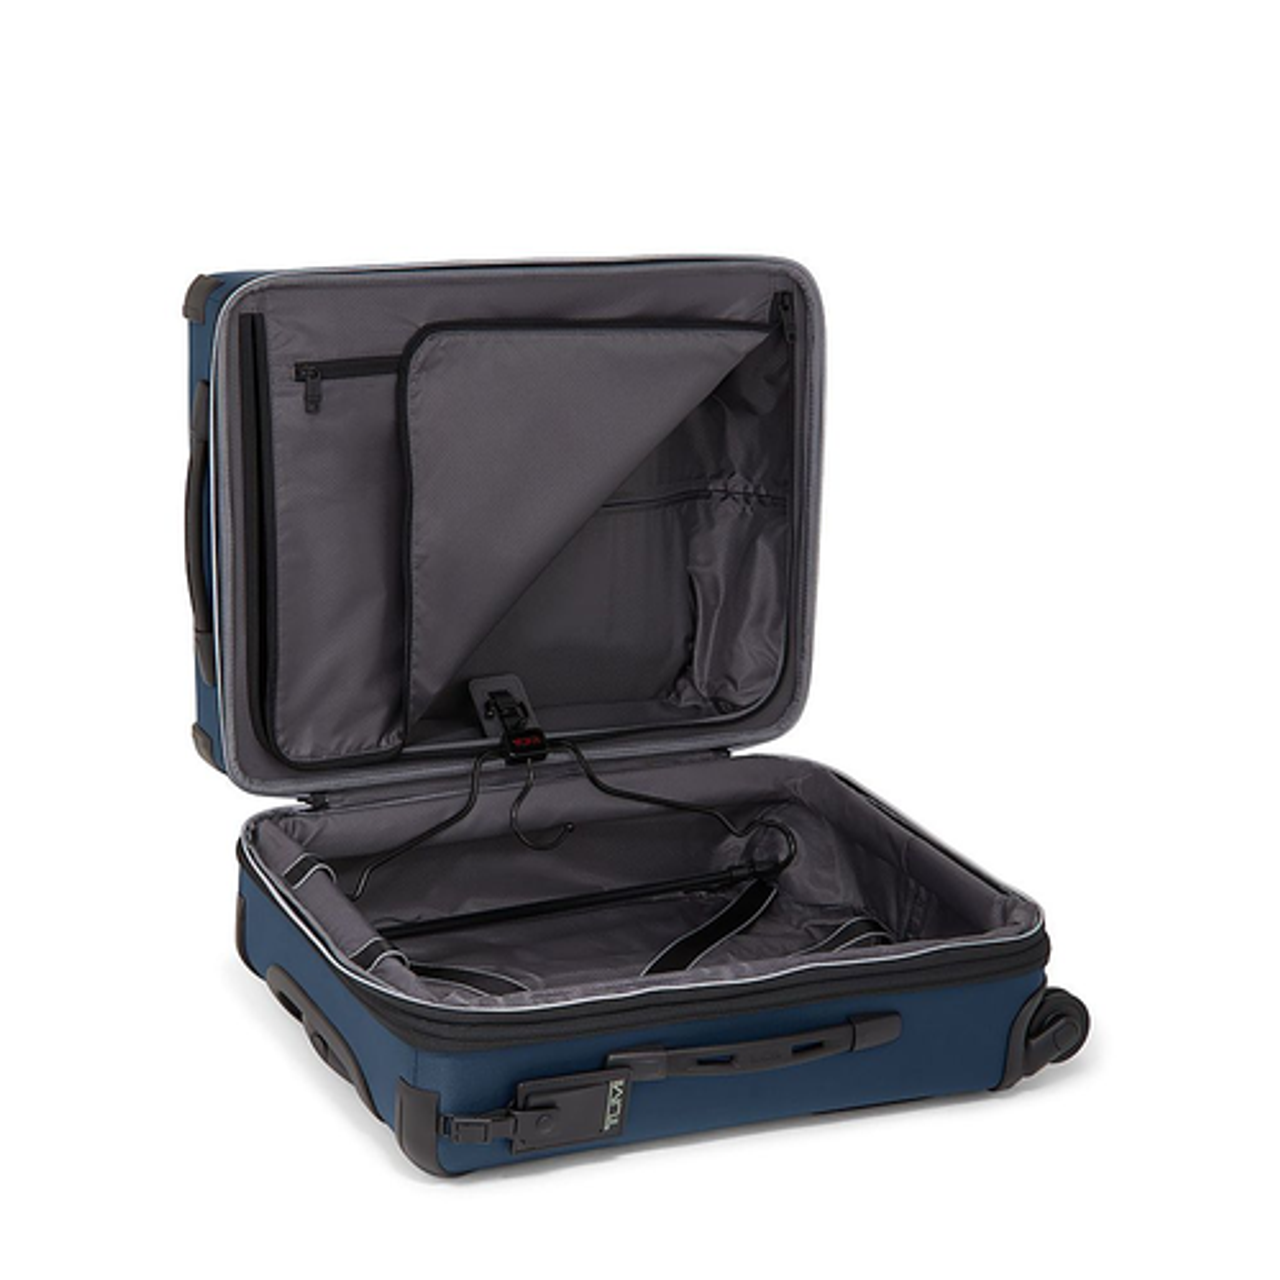 TUMI - Aerotour Continental Expandable 4 Wheeled Tilting Suitcase - Navy